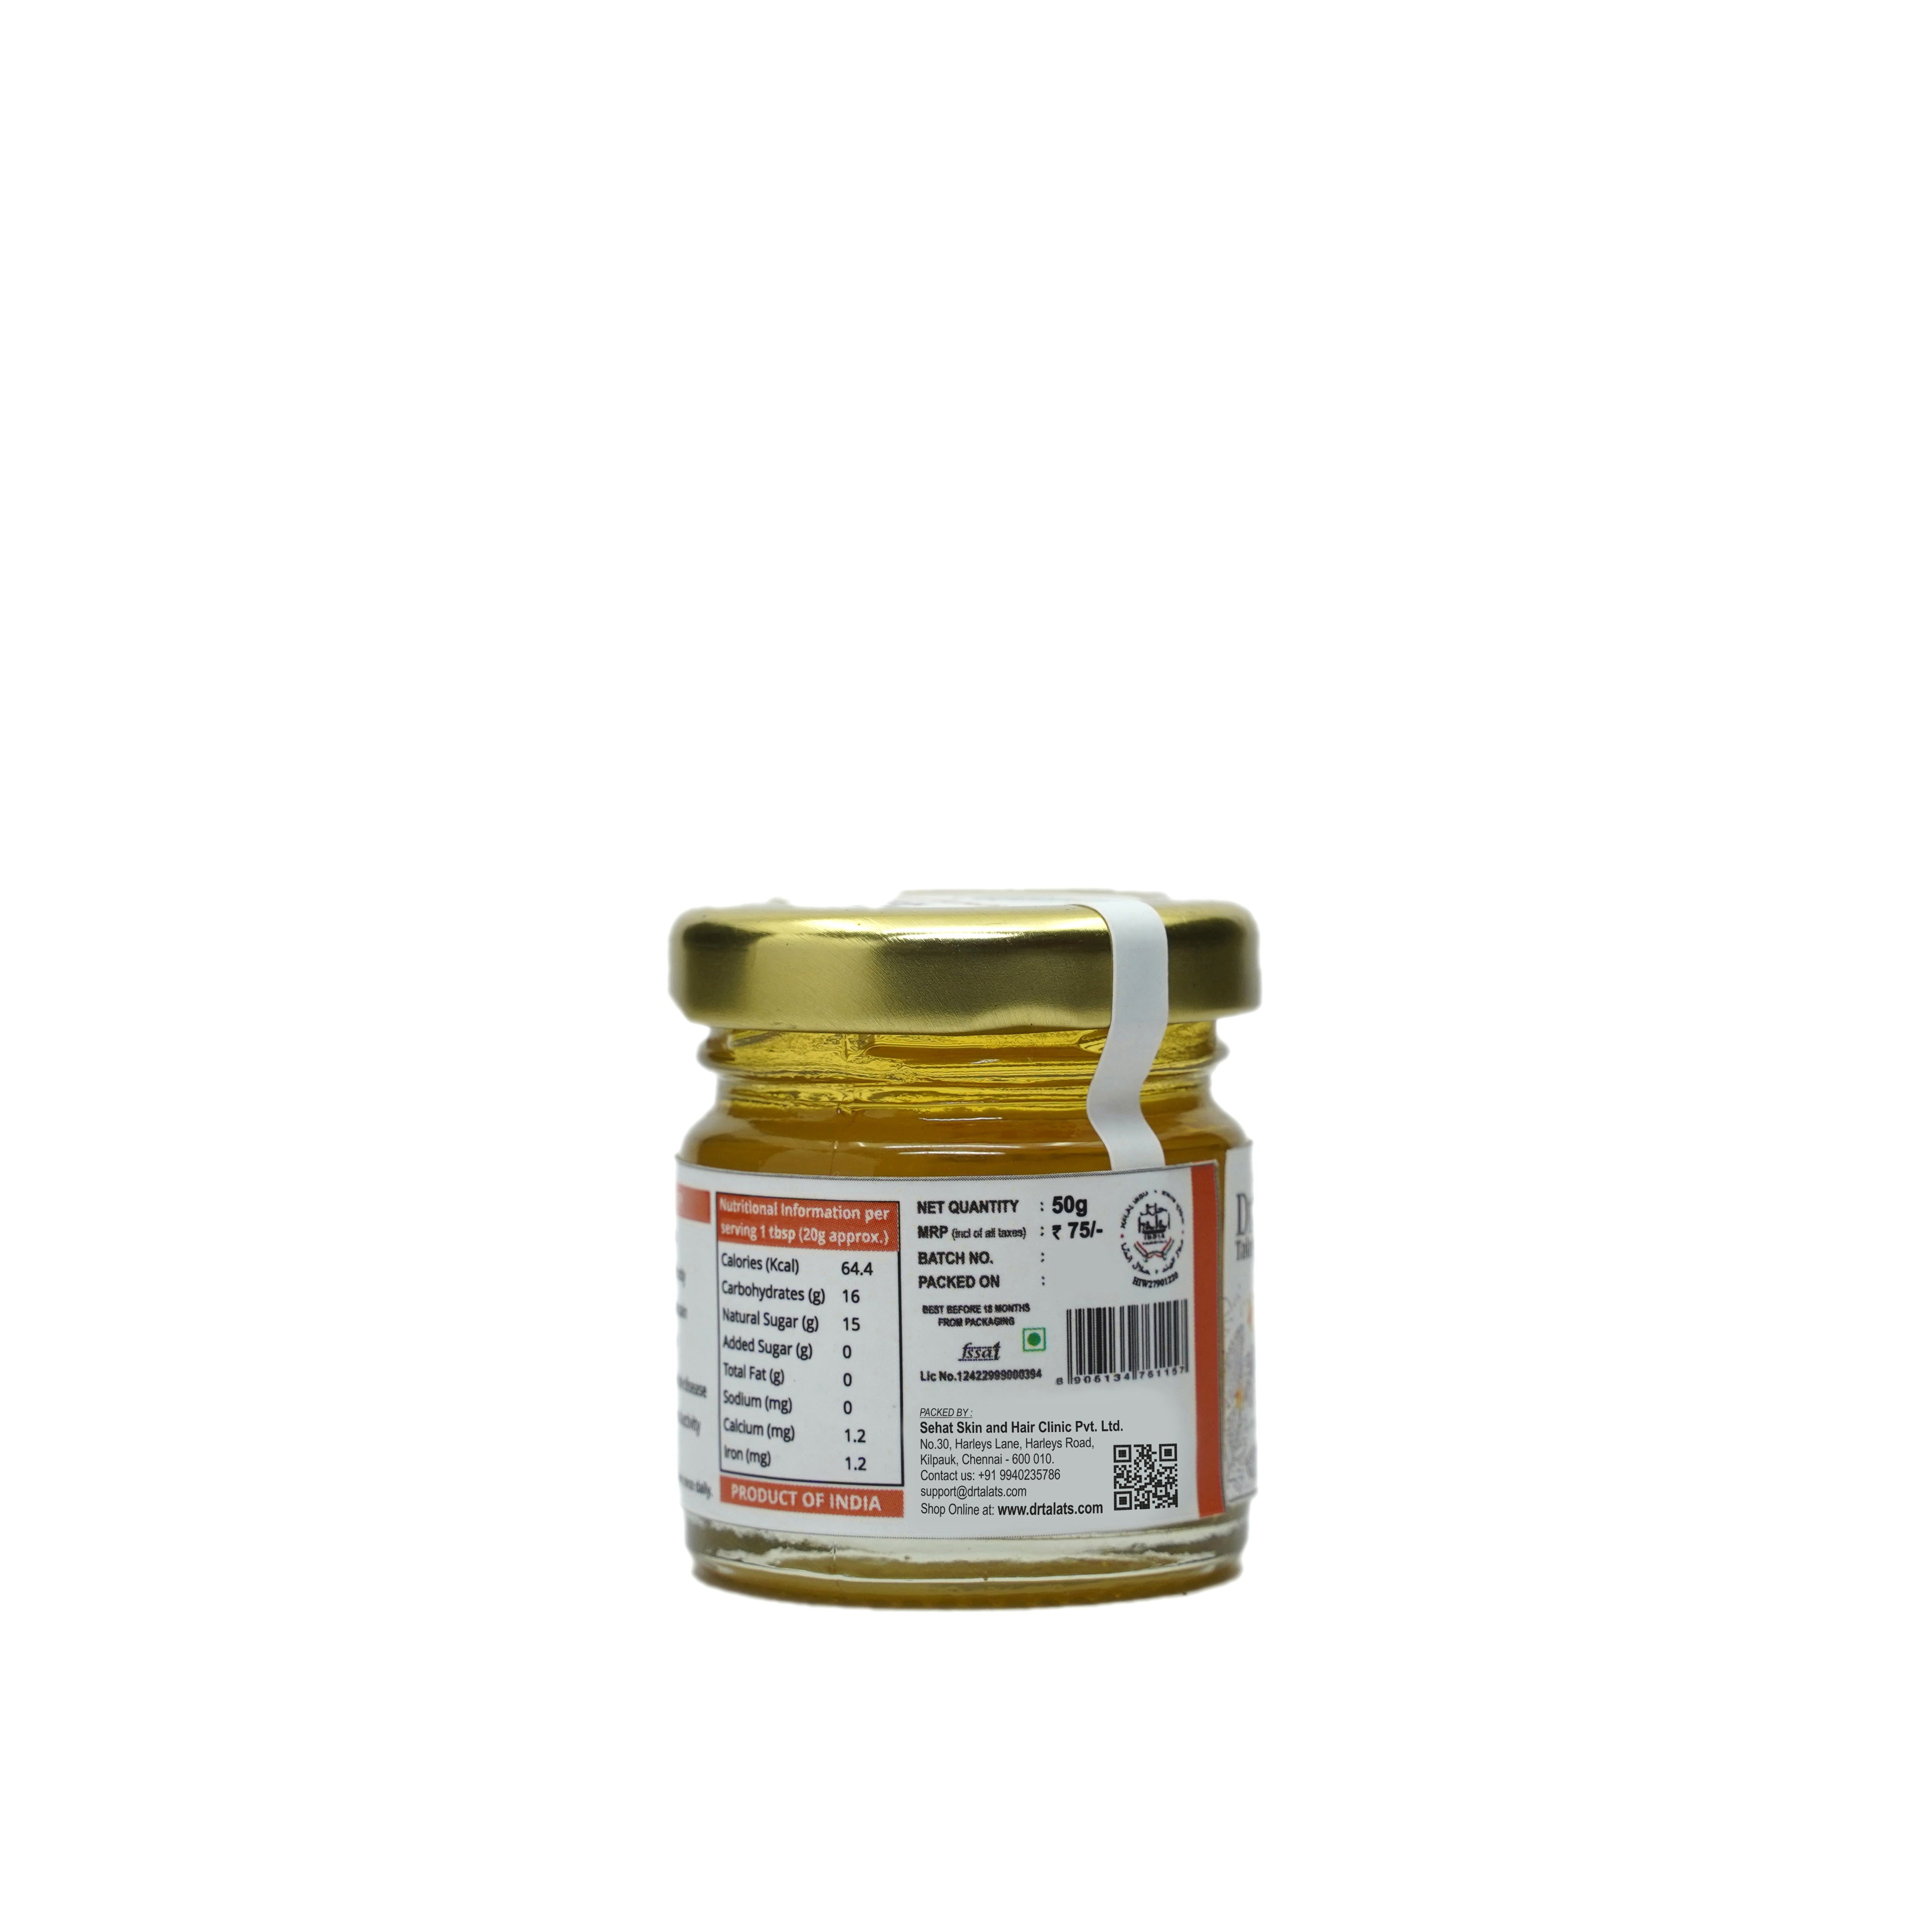 Premium Kashmir Acacia Honey